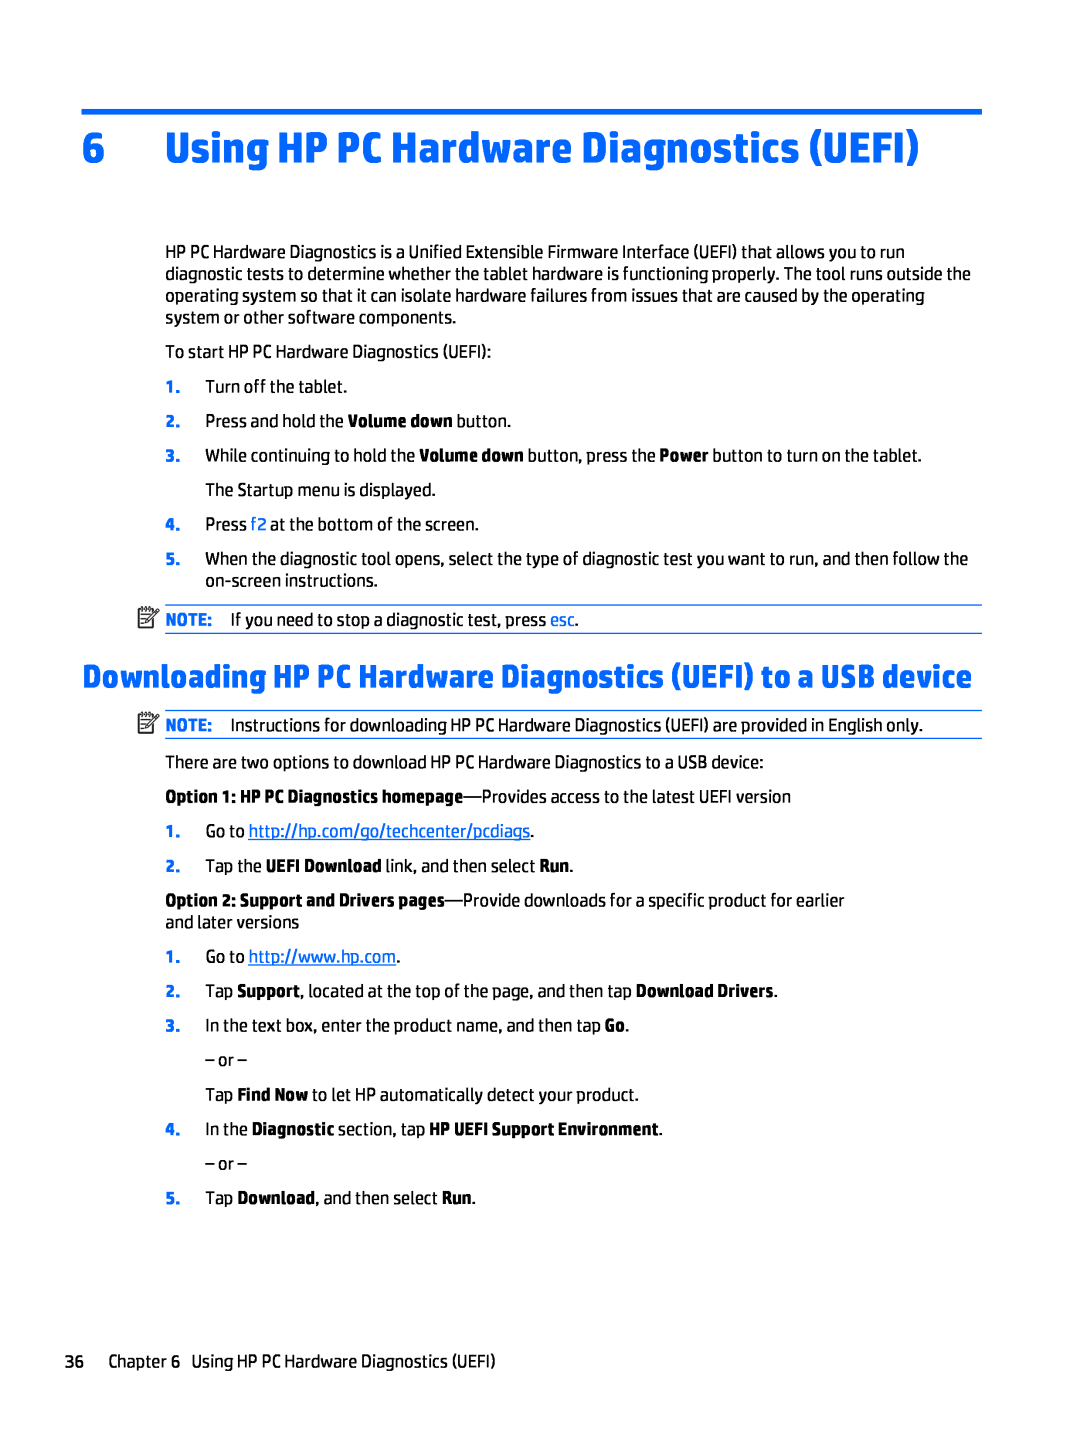 HP Stream 8 - 5909 Using HP PC Hardware Diagnostics UEFI, Downloading HP PC Hardware Diagnostics UEFI to a USB device 